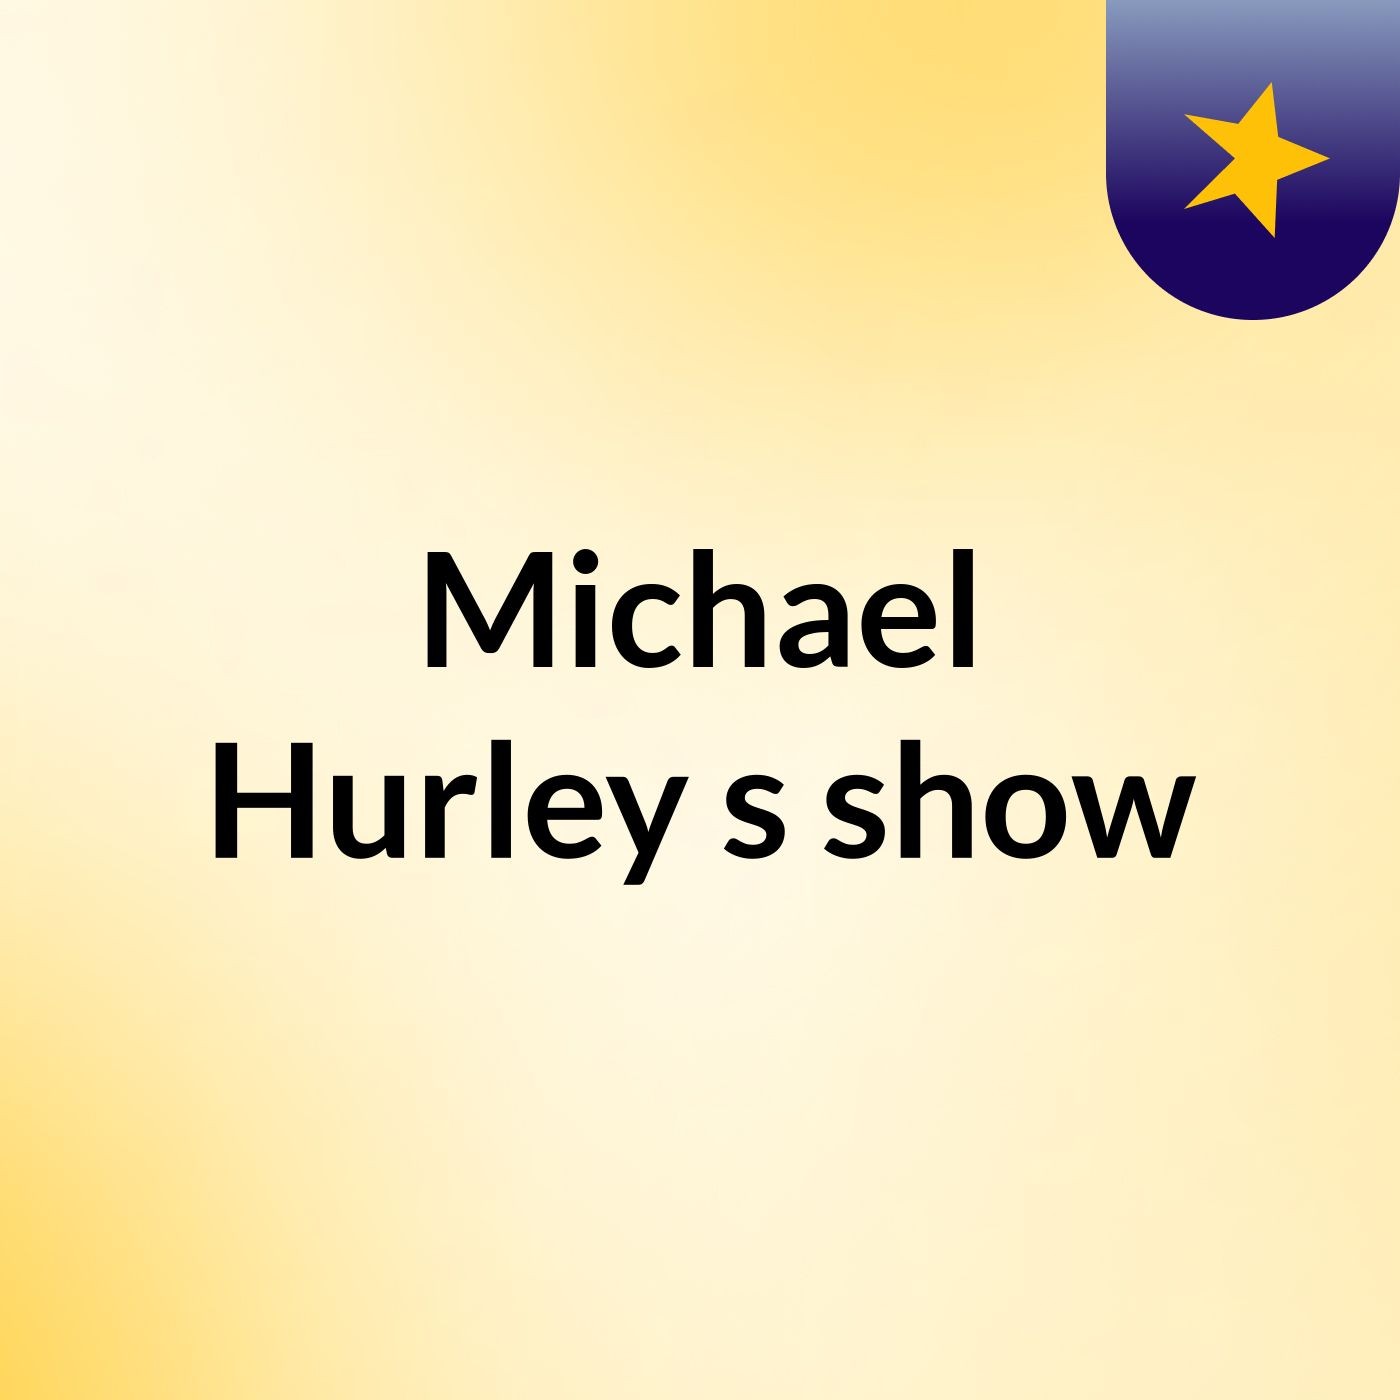 Michael Hurley's show